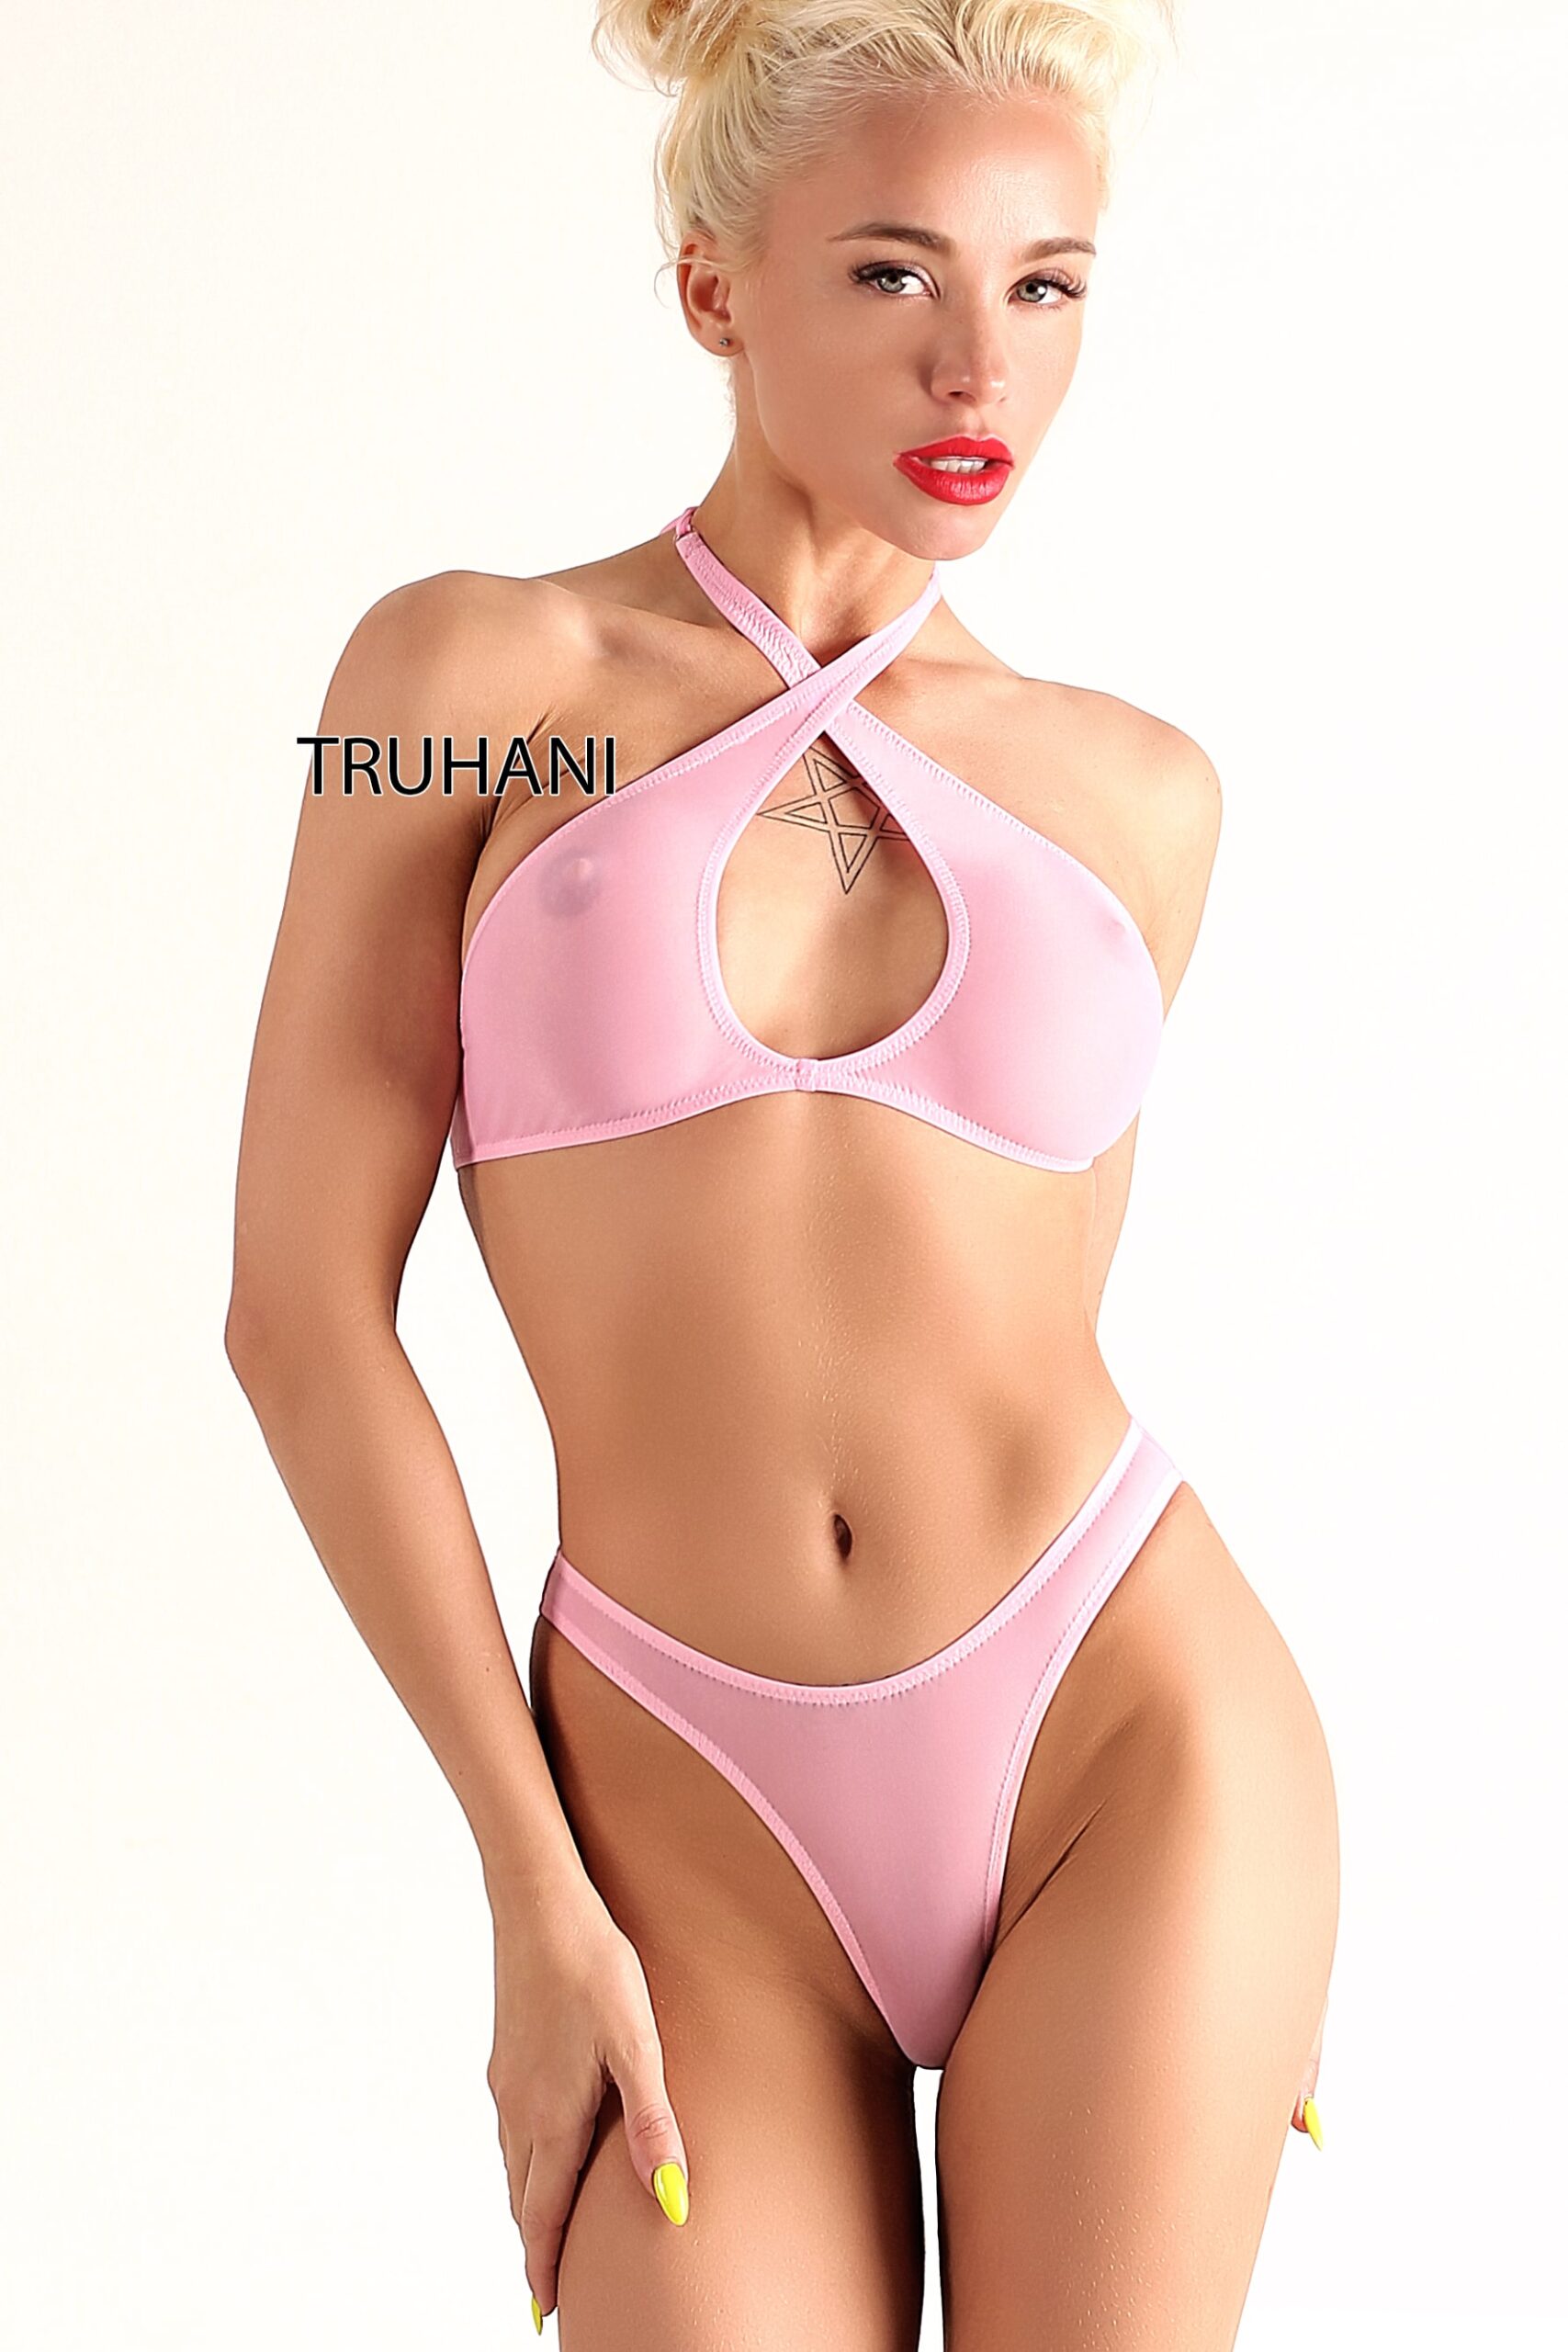 Hot pink extreme sexy designer see through brazilian bikini set bottom & bra. High cut leg two piece sheer mini swimsuit. High waist cute panties & top.